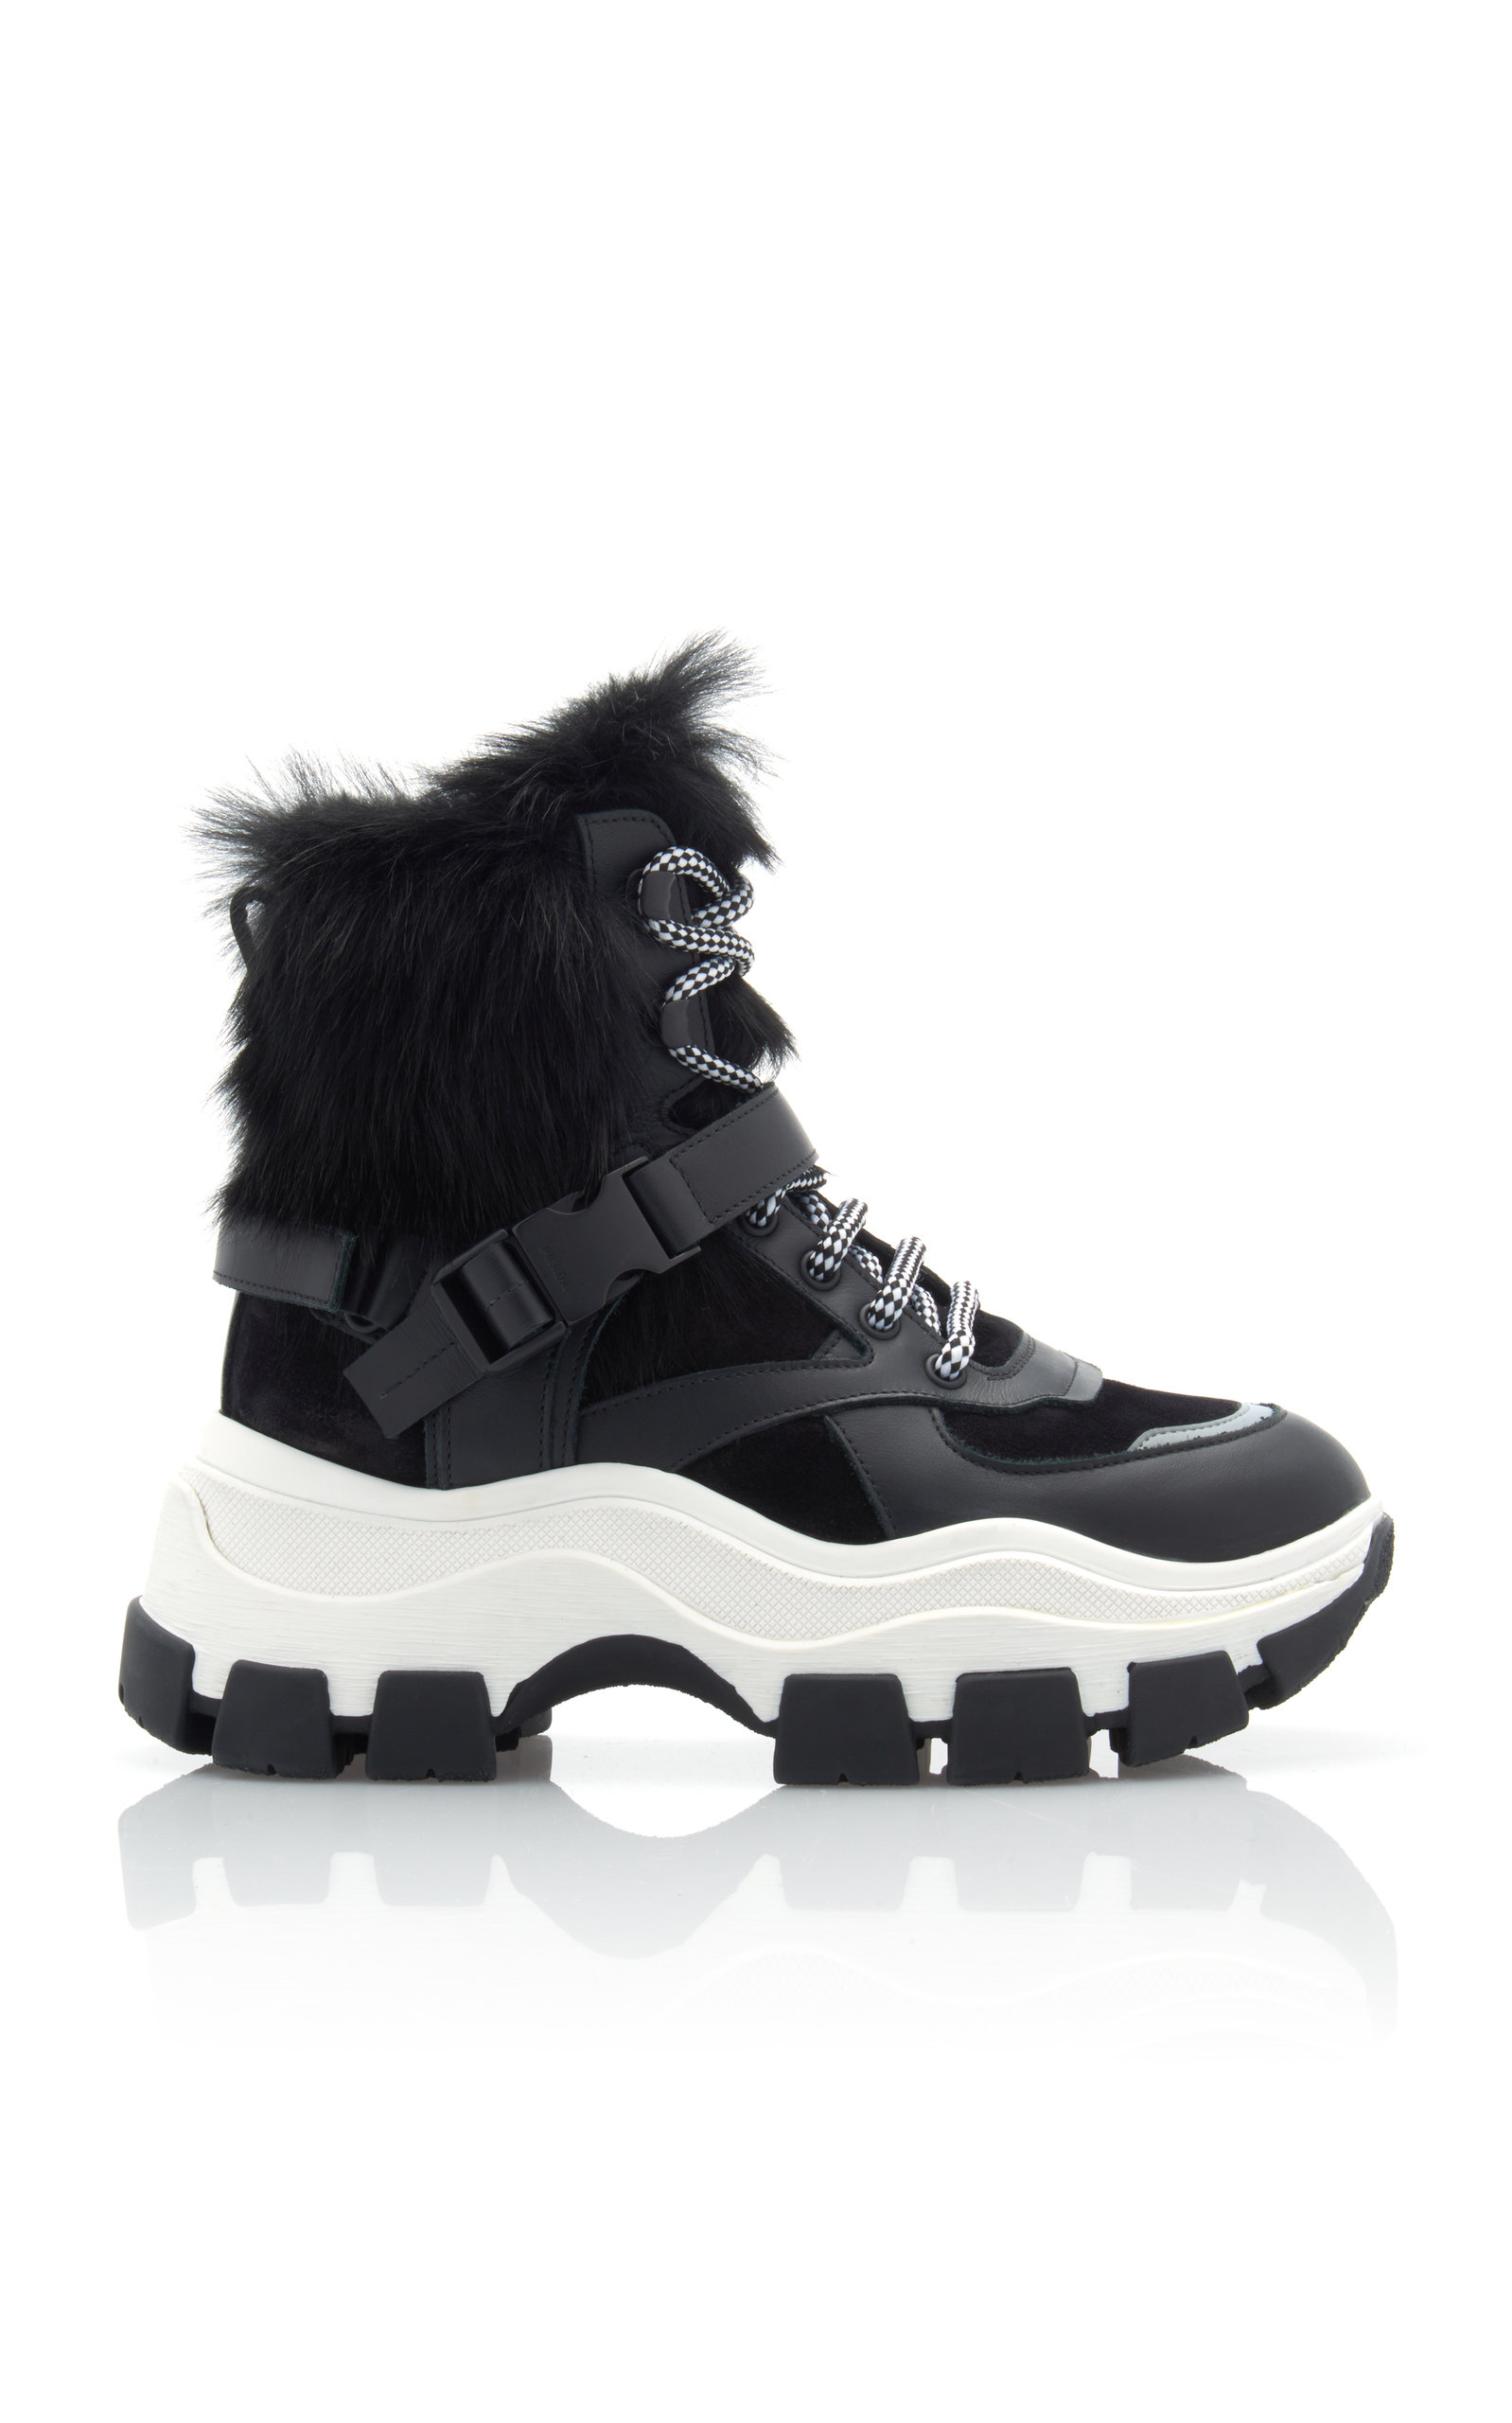 Prada - Women's Fur-Trimmed Leather And Rubber High-Top Sneakers - Black/white - IT 40.5 - Moda Operandi